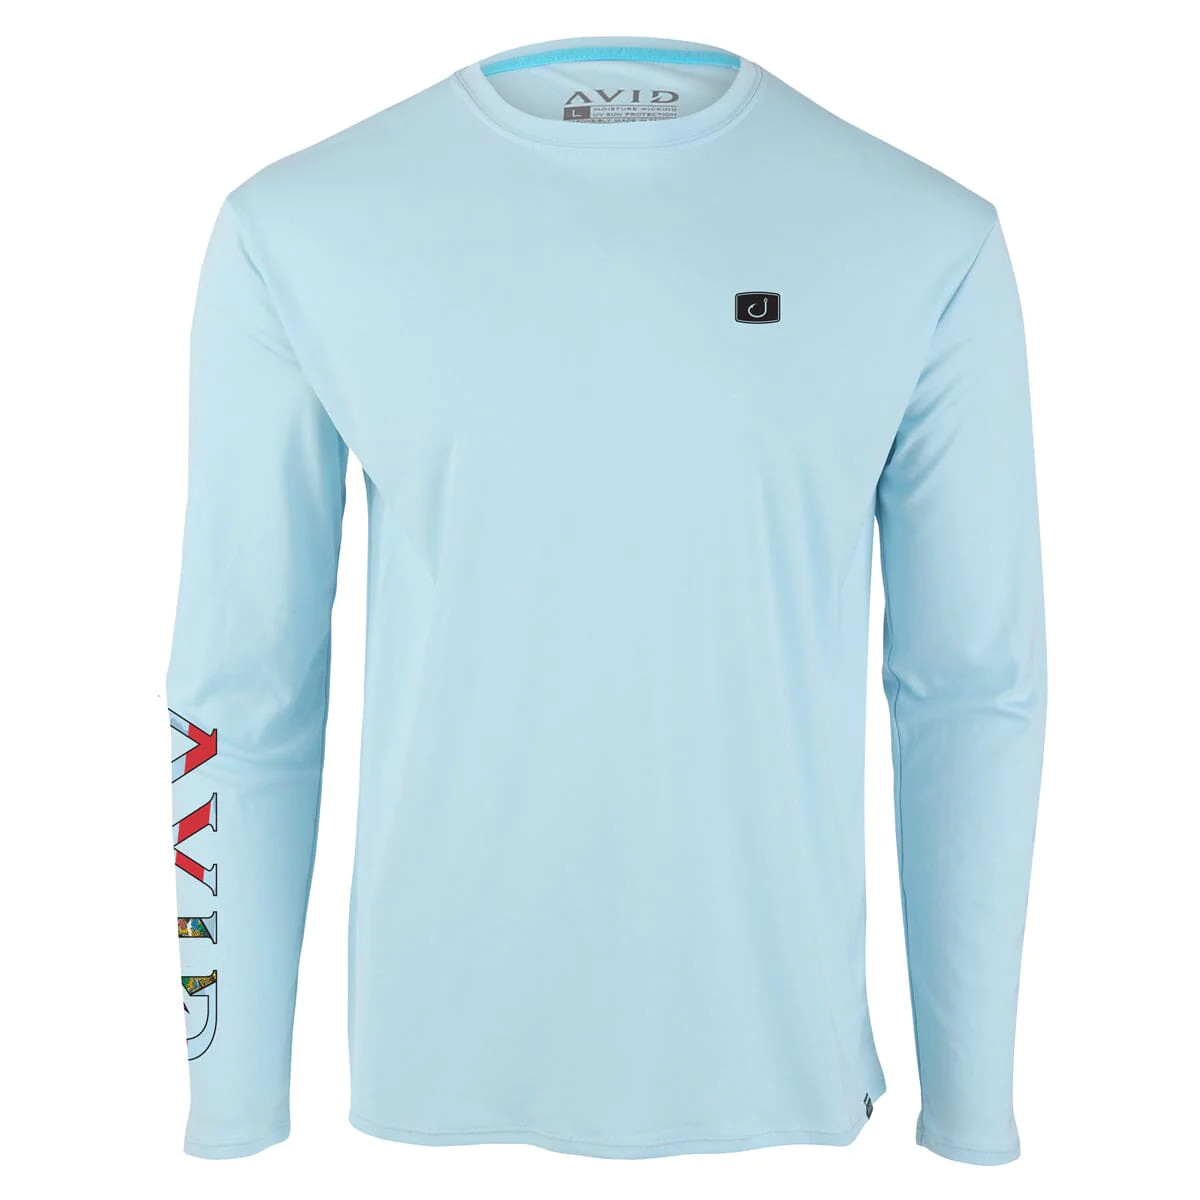 AVID Florida Native AVIDry Long Sleeve Performance Shirt (Men's) - Ice Blue Front